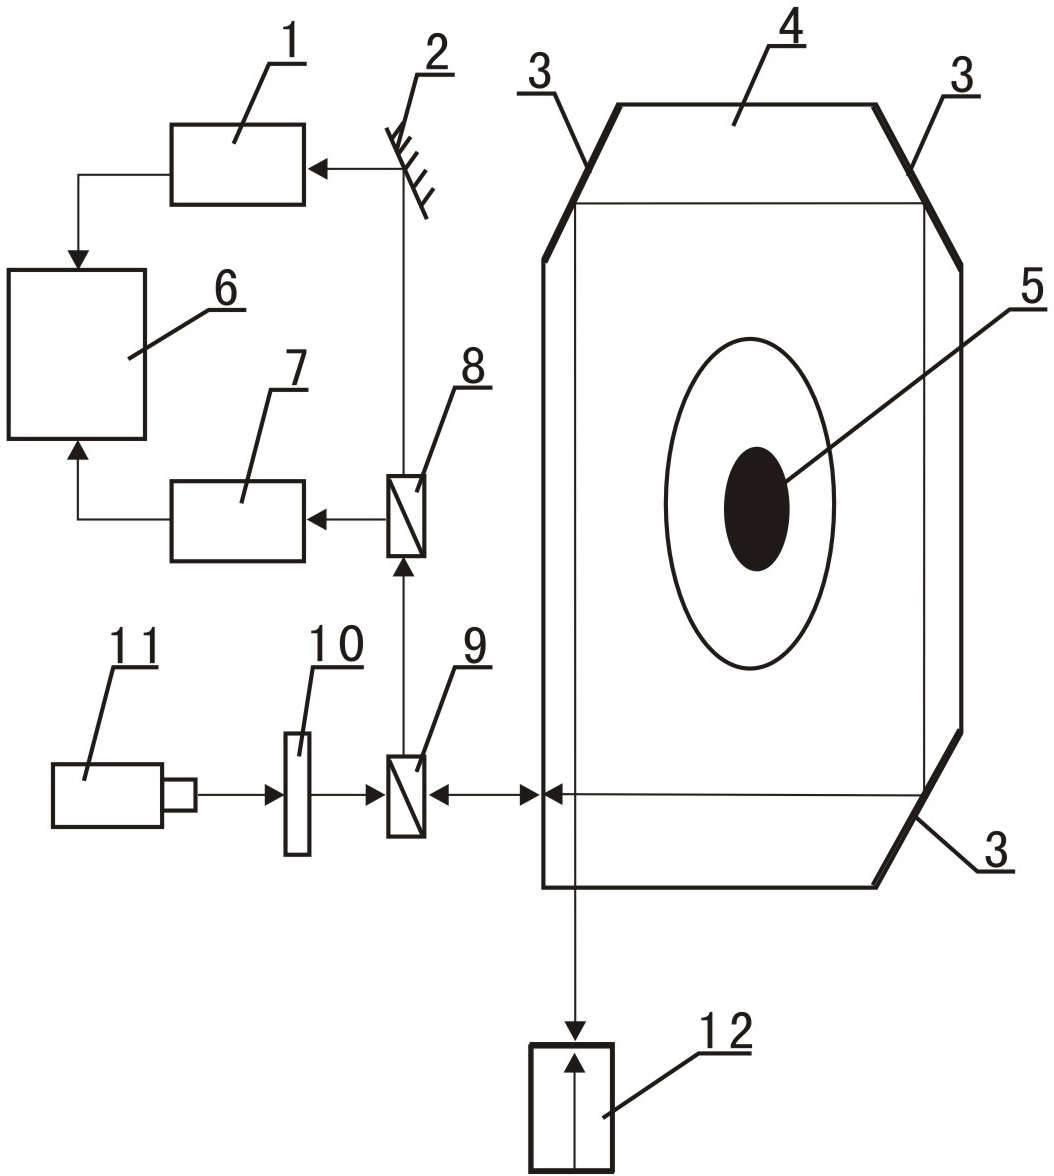 Faraday mirror optical current transformer for transformer substation